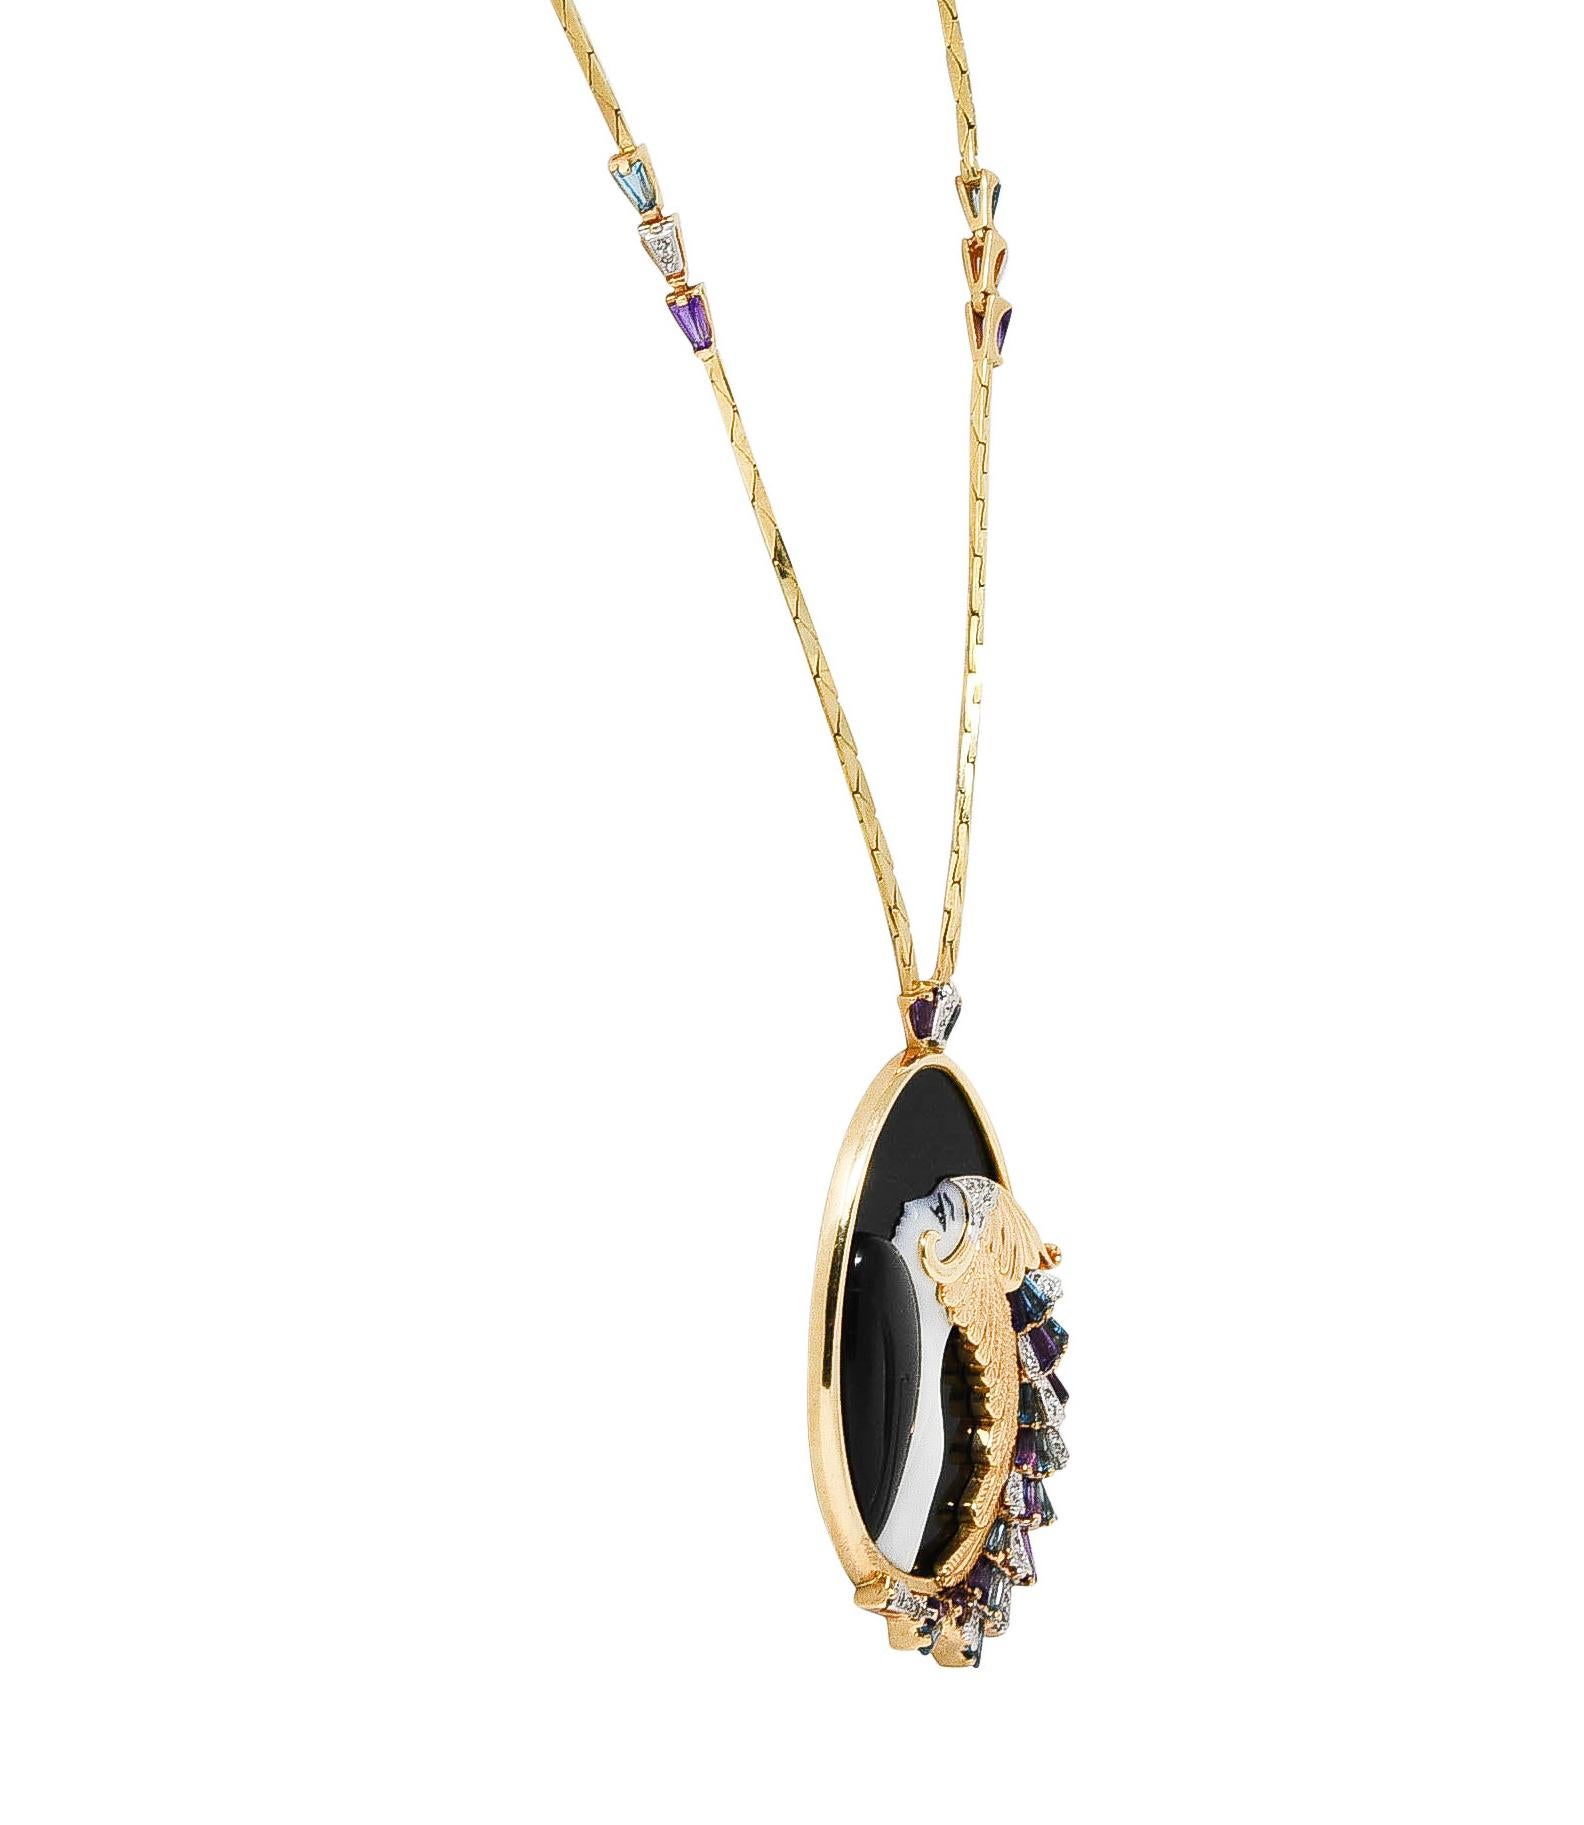 Oval Cut Erté Beauty of the Beast Diamond Amethyst Topaz Onyx Mother-of-pearl Necklace